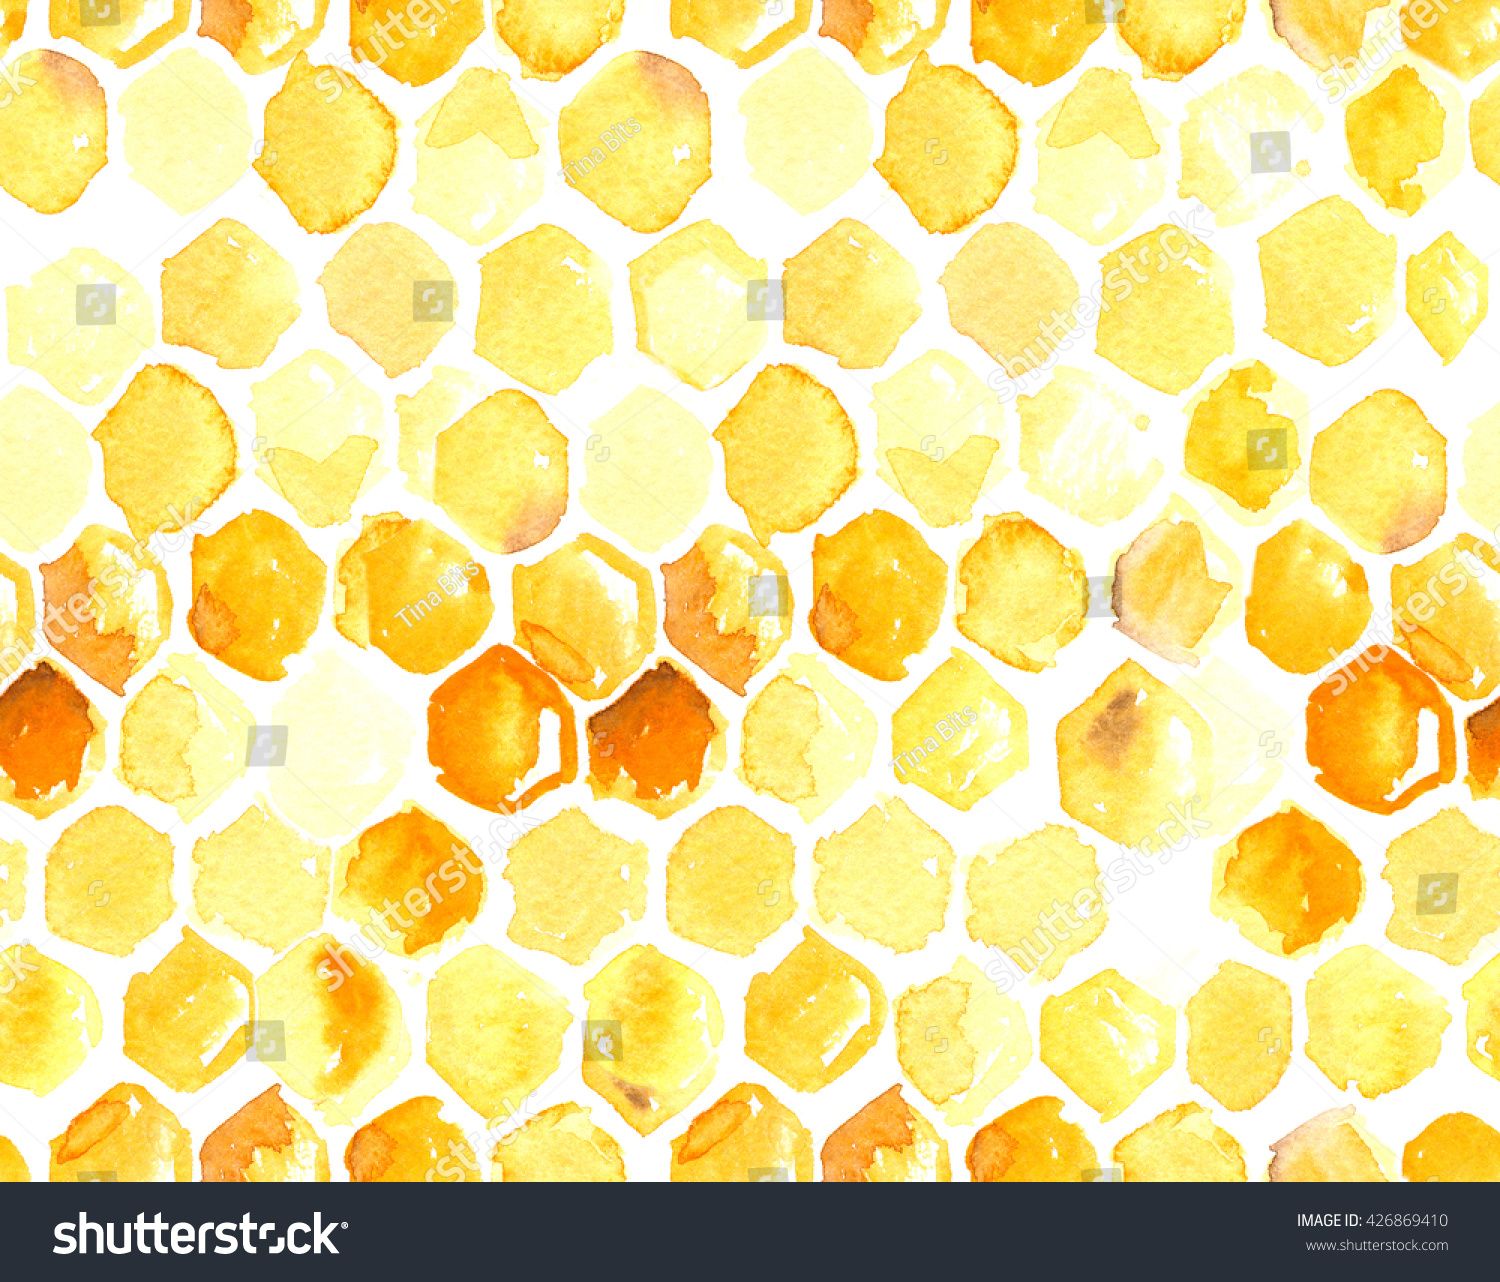 Honeycomb watercolor clipart.